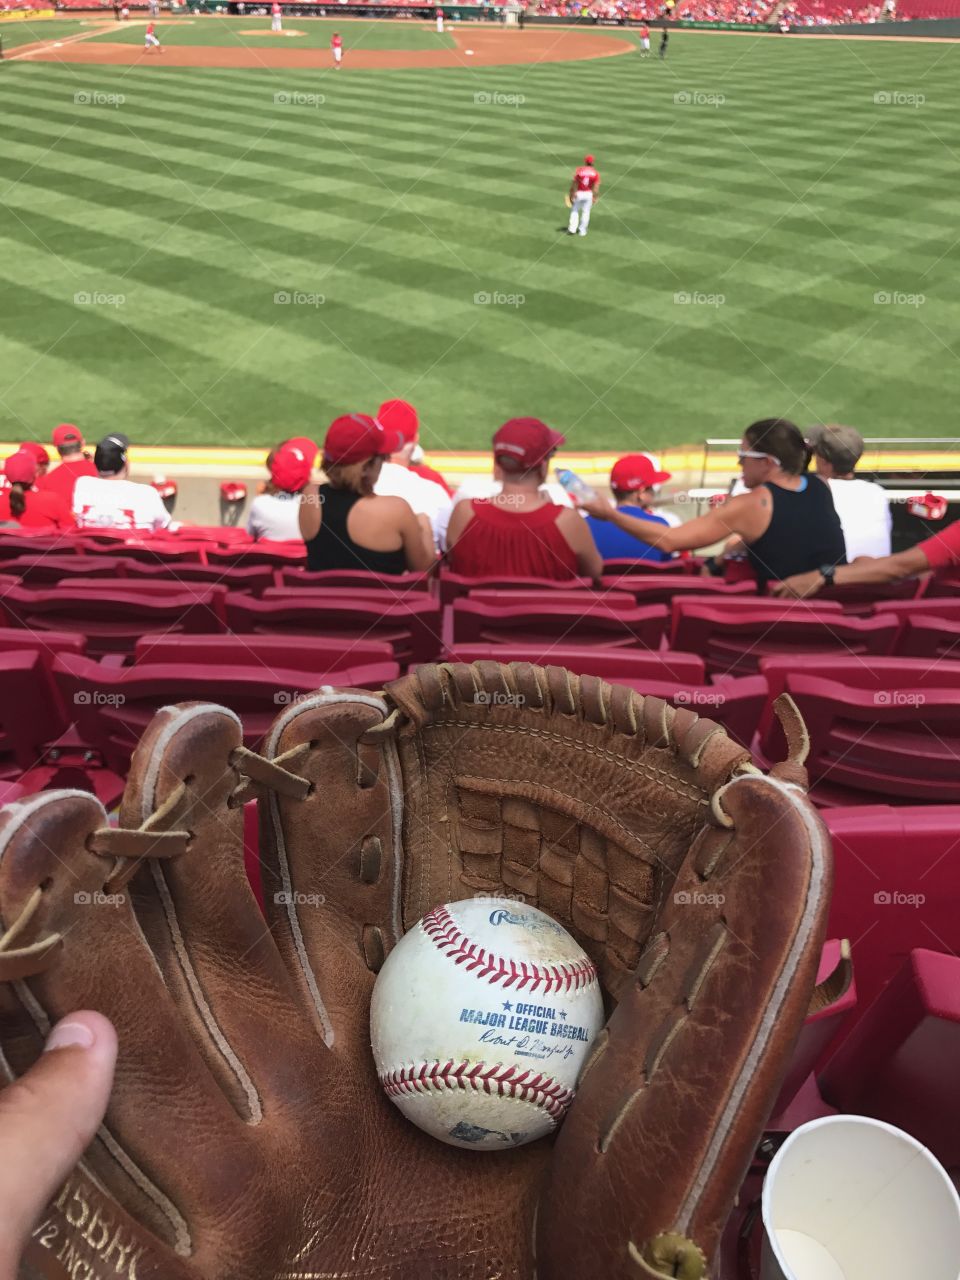 Caught baseball 